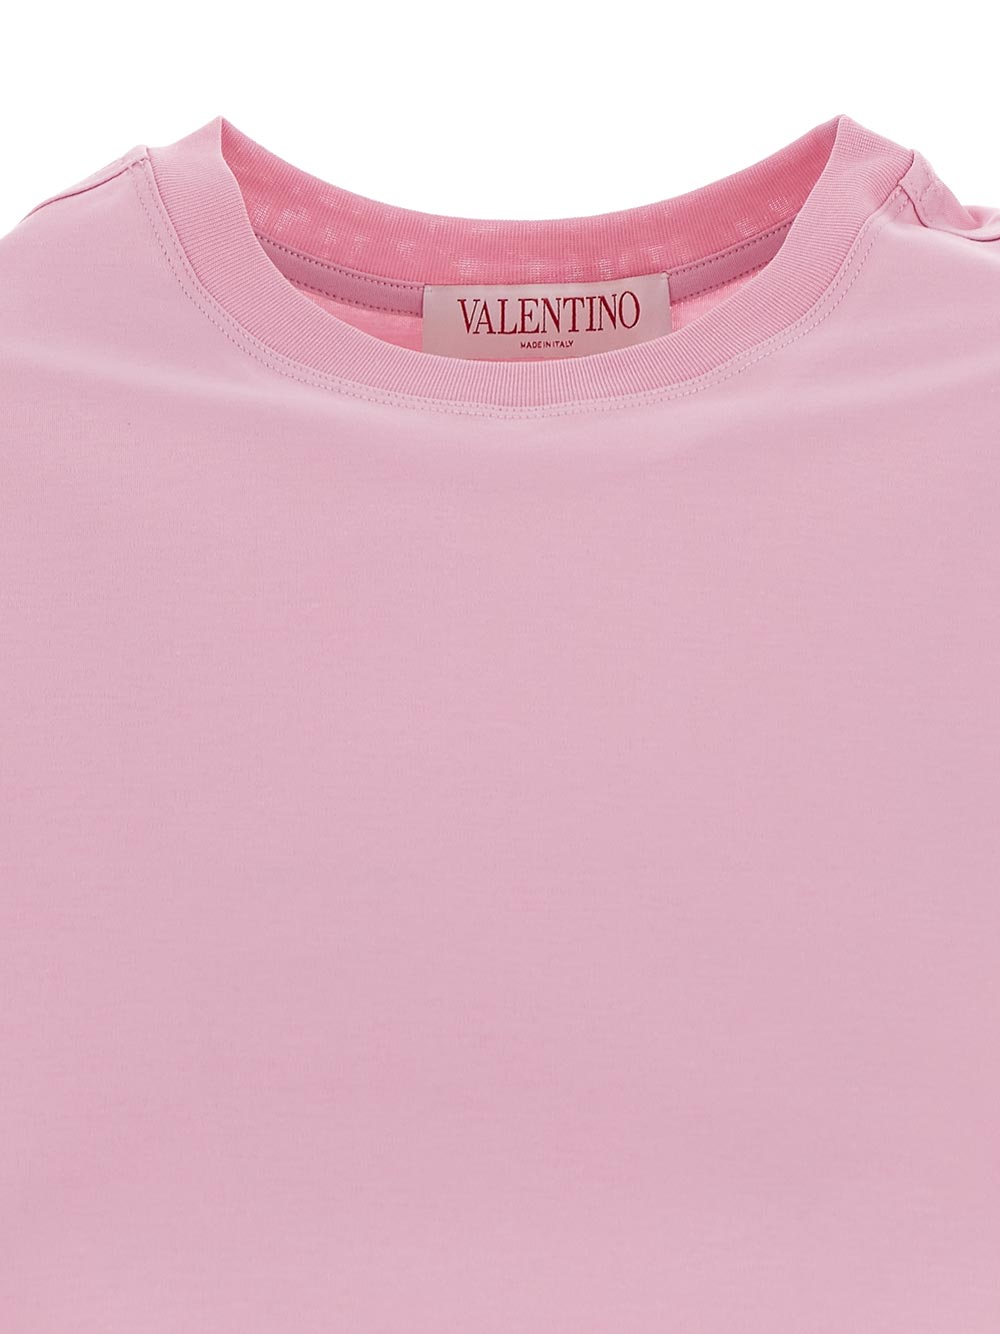 Valentino Jersey Cotton T-Shirt